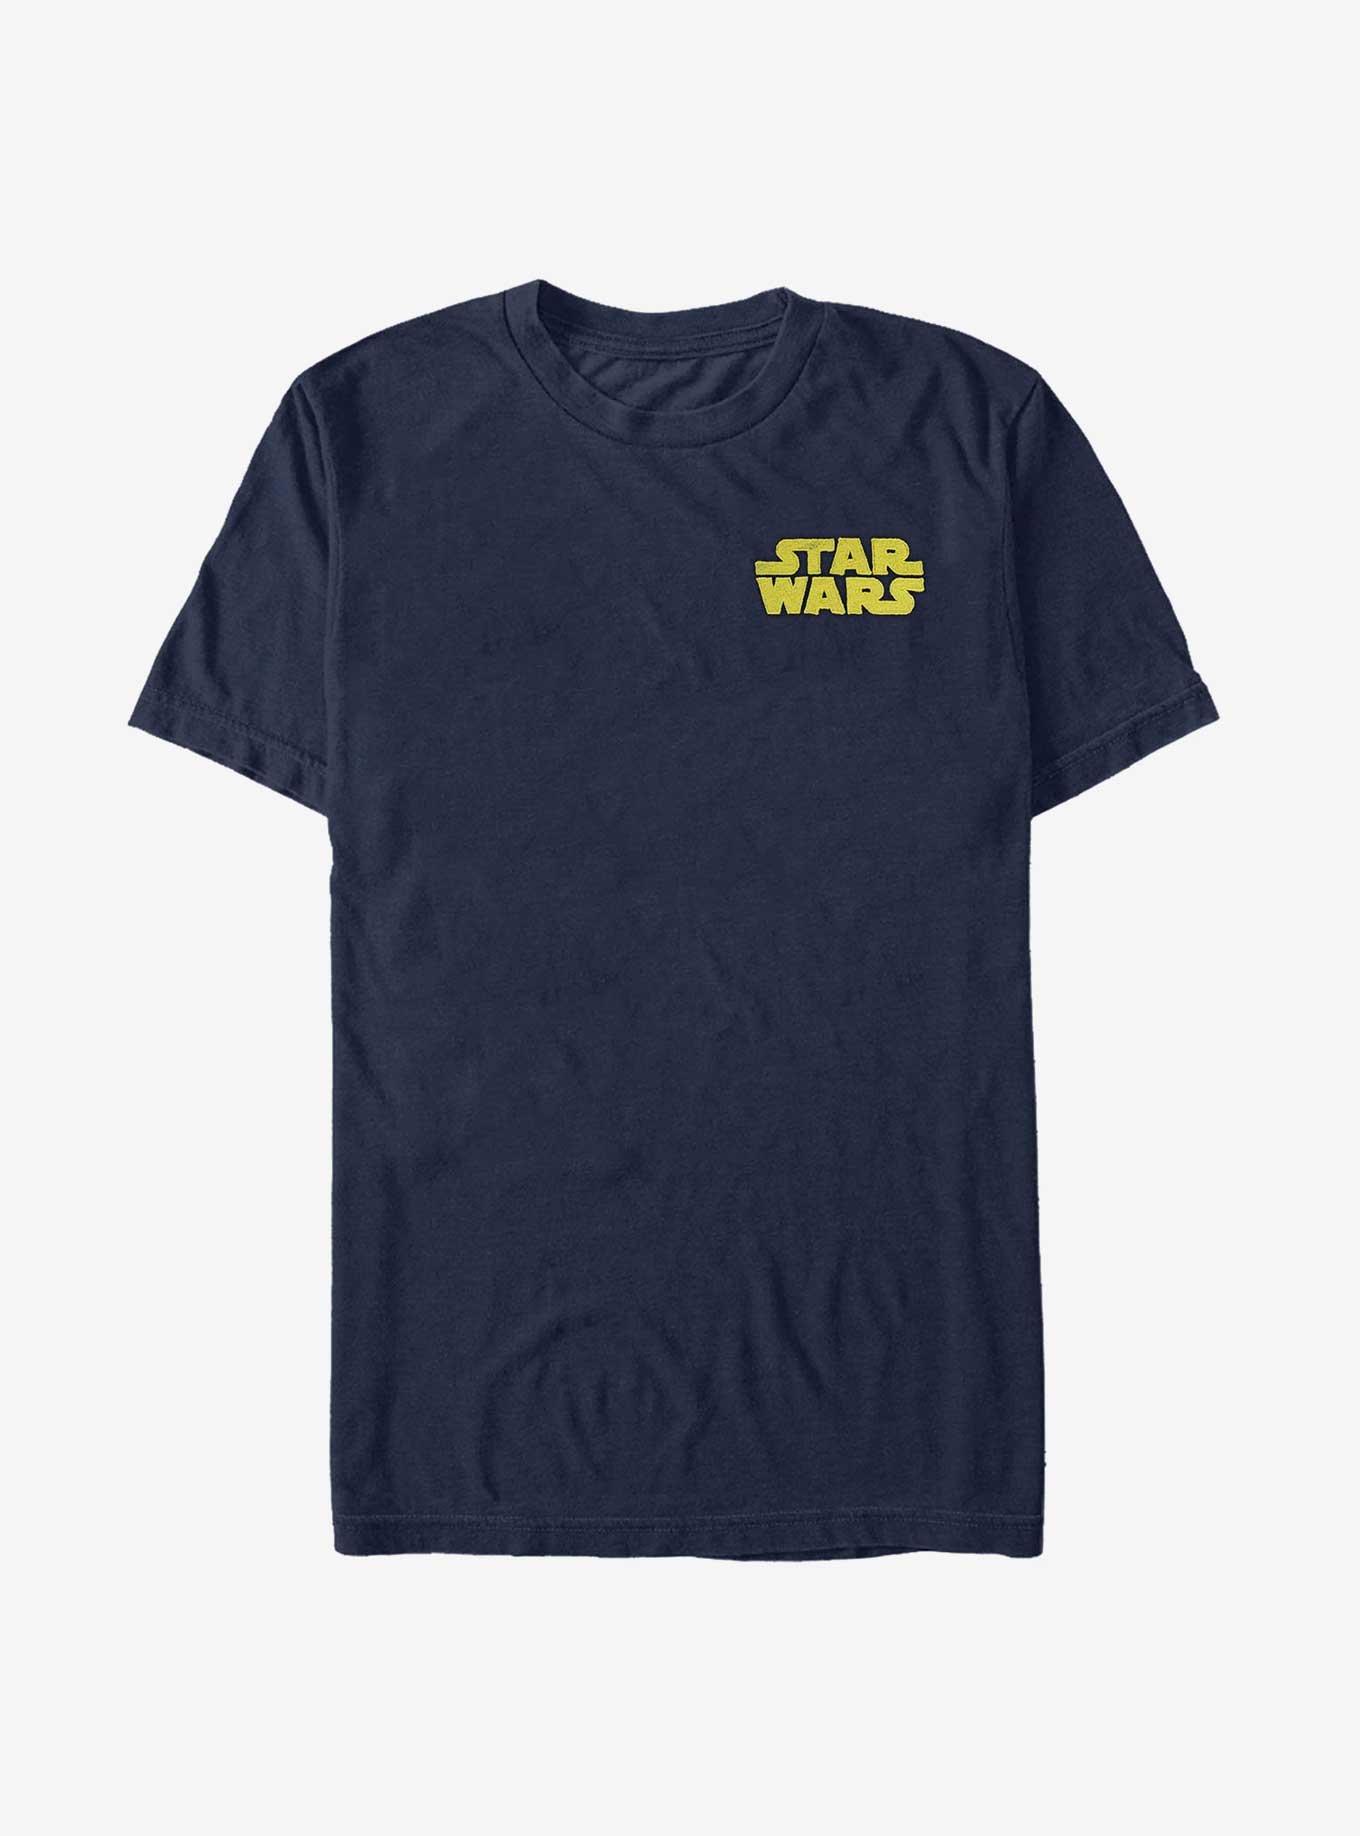 Star Wars Embroidered Logo T-Shirt, NAVY, hi-res